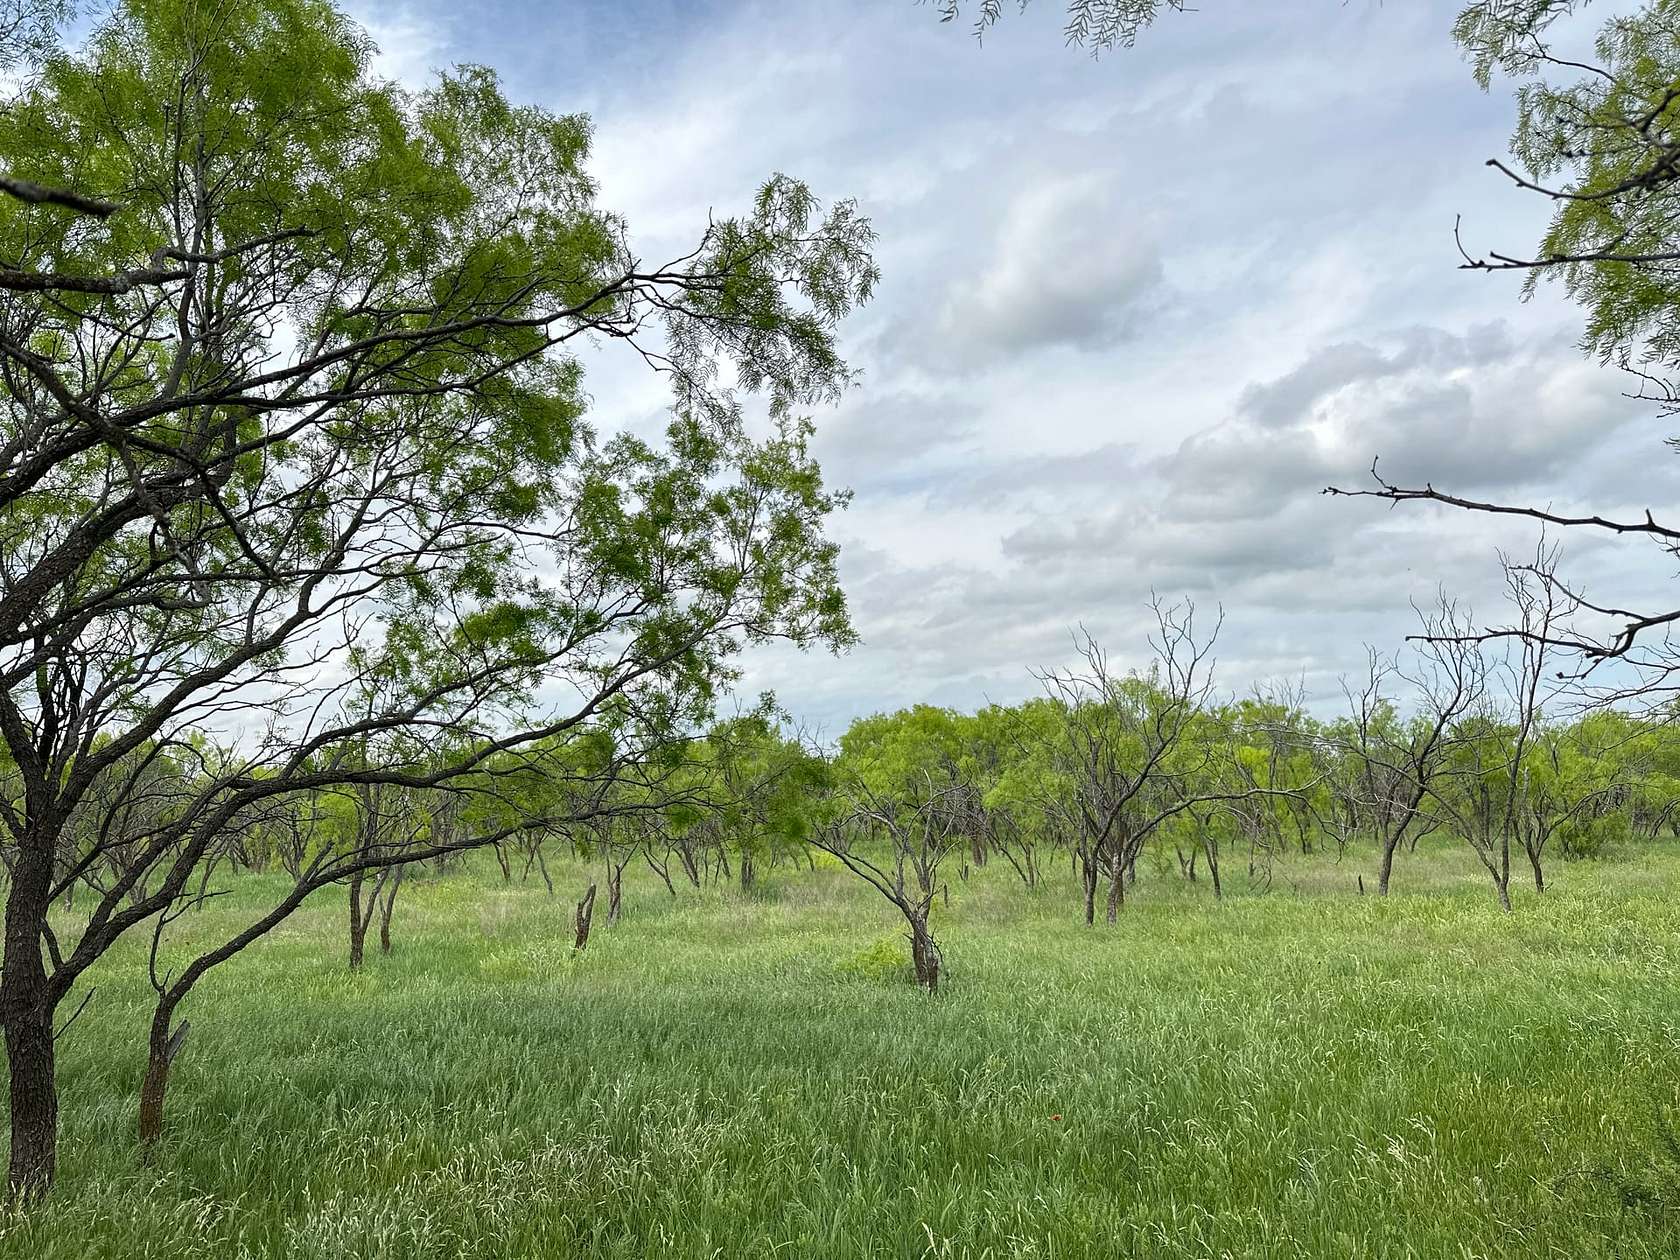 79 Acres of Recreational Land & Farm for Sale in Abilene, Texas